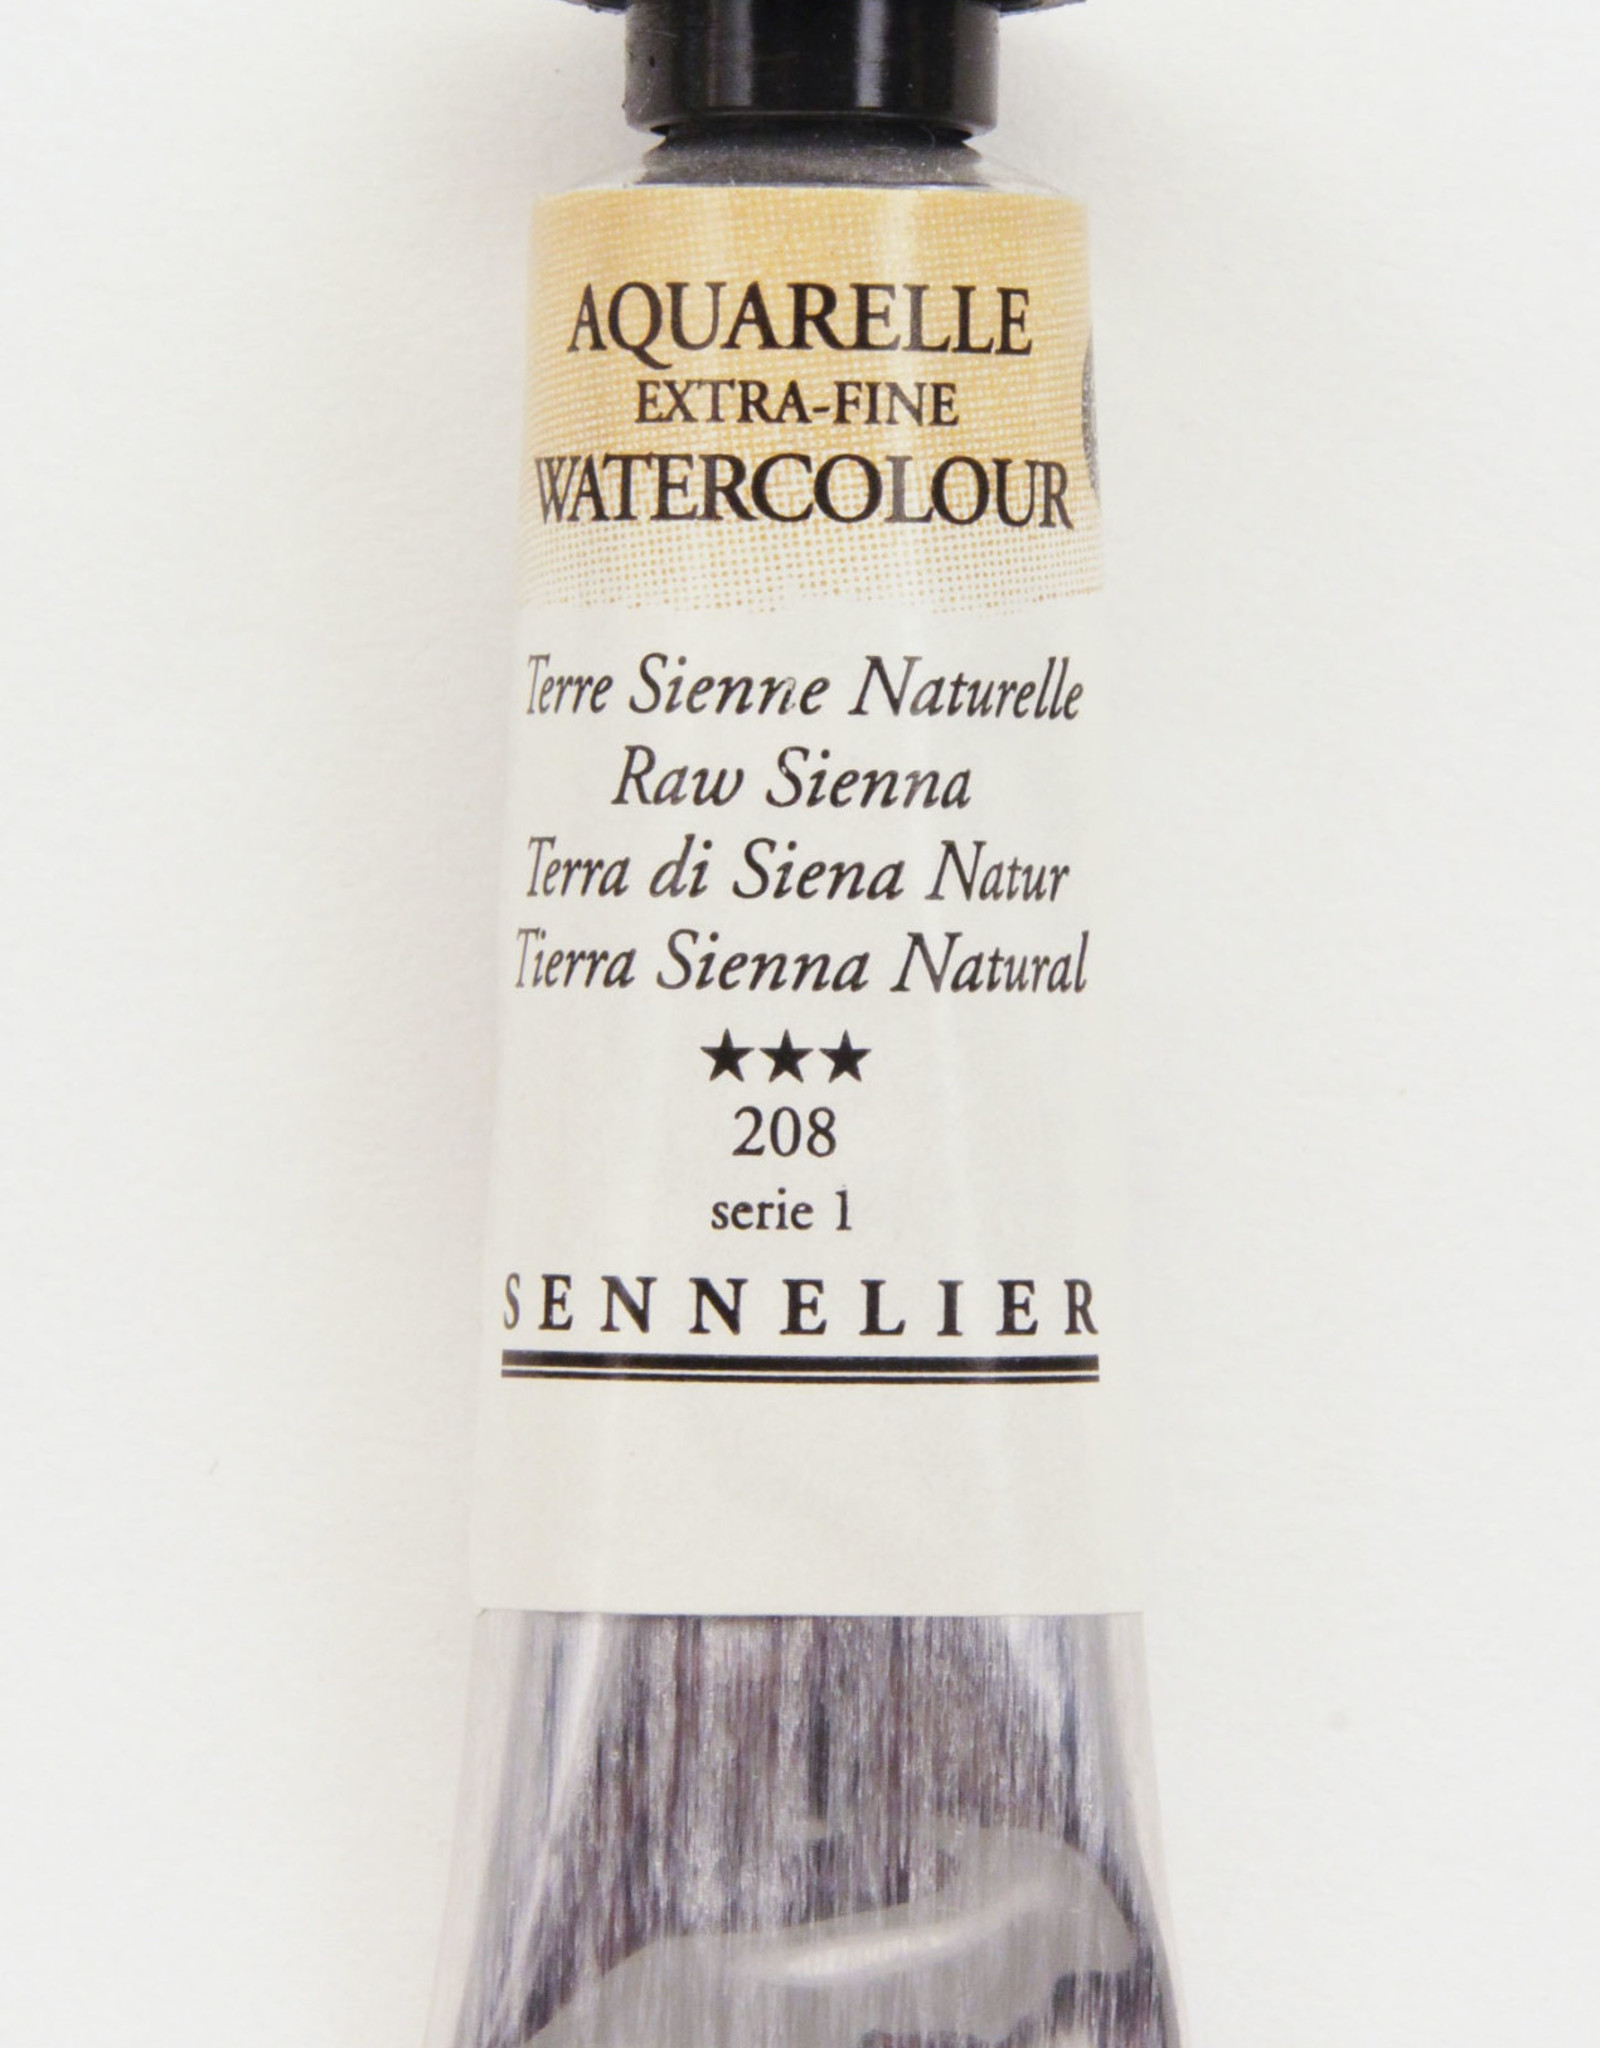 Sennelier, Aquarelle Watercolor Paint, Raw Sienna, 208, 10ml Tube, Series 1